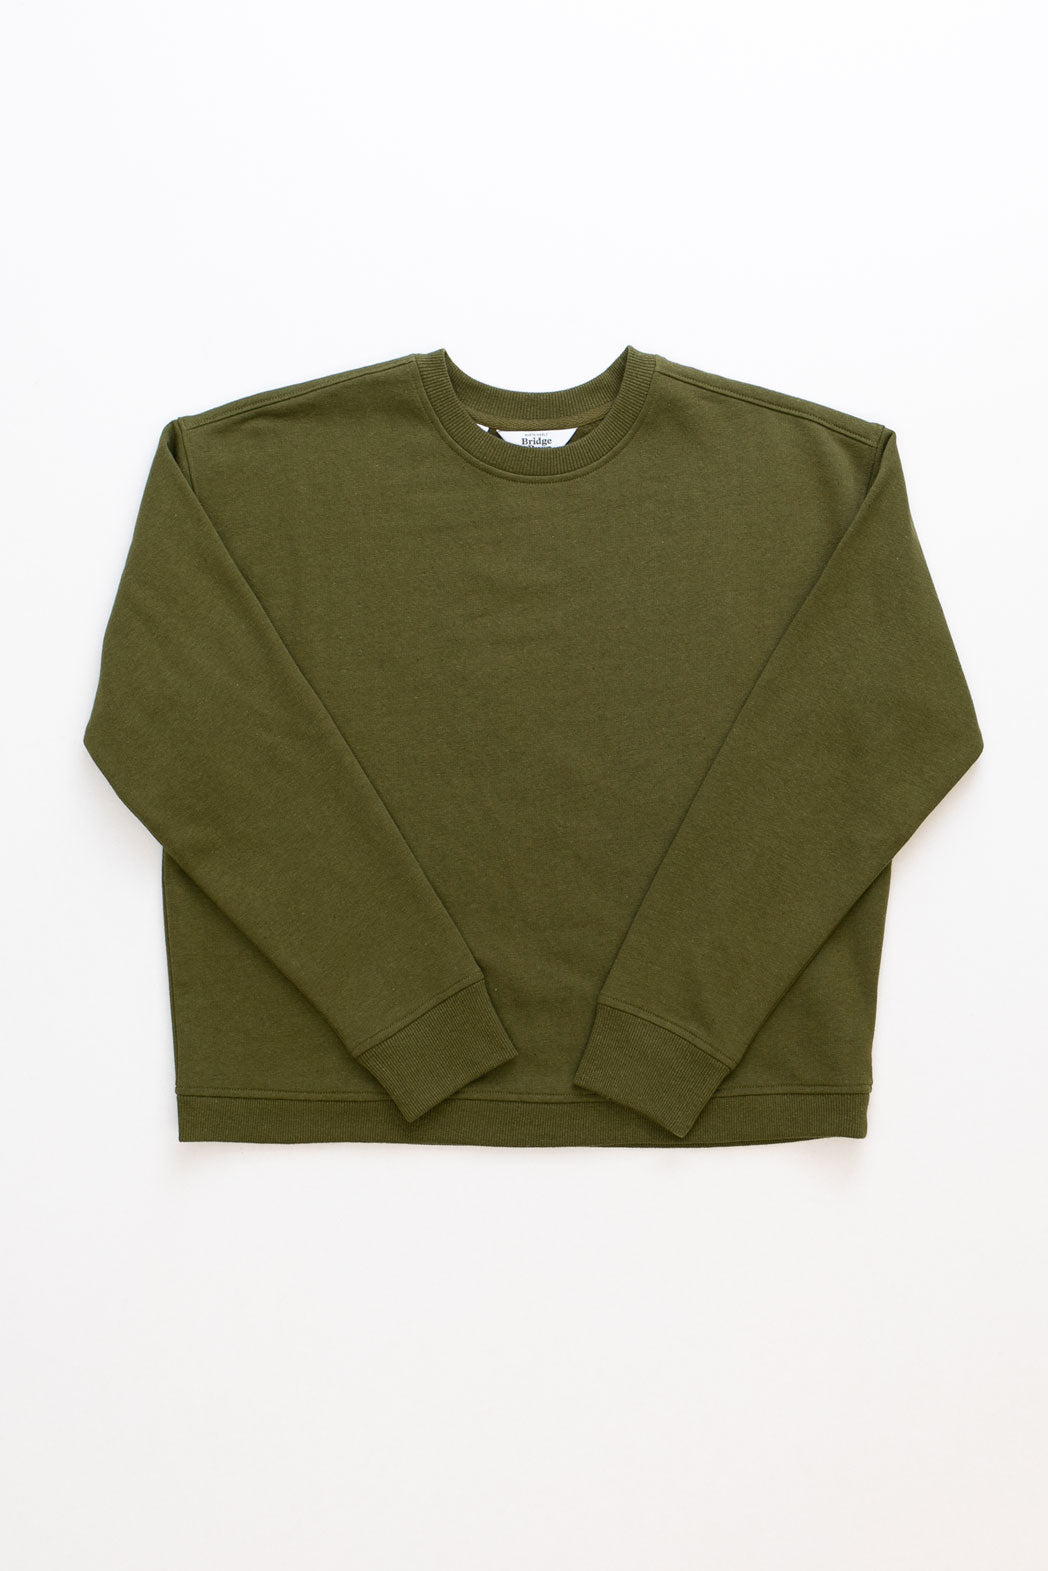 Hawthorne Boxy Crew Sweatshirt / Olive